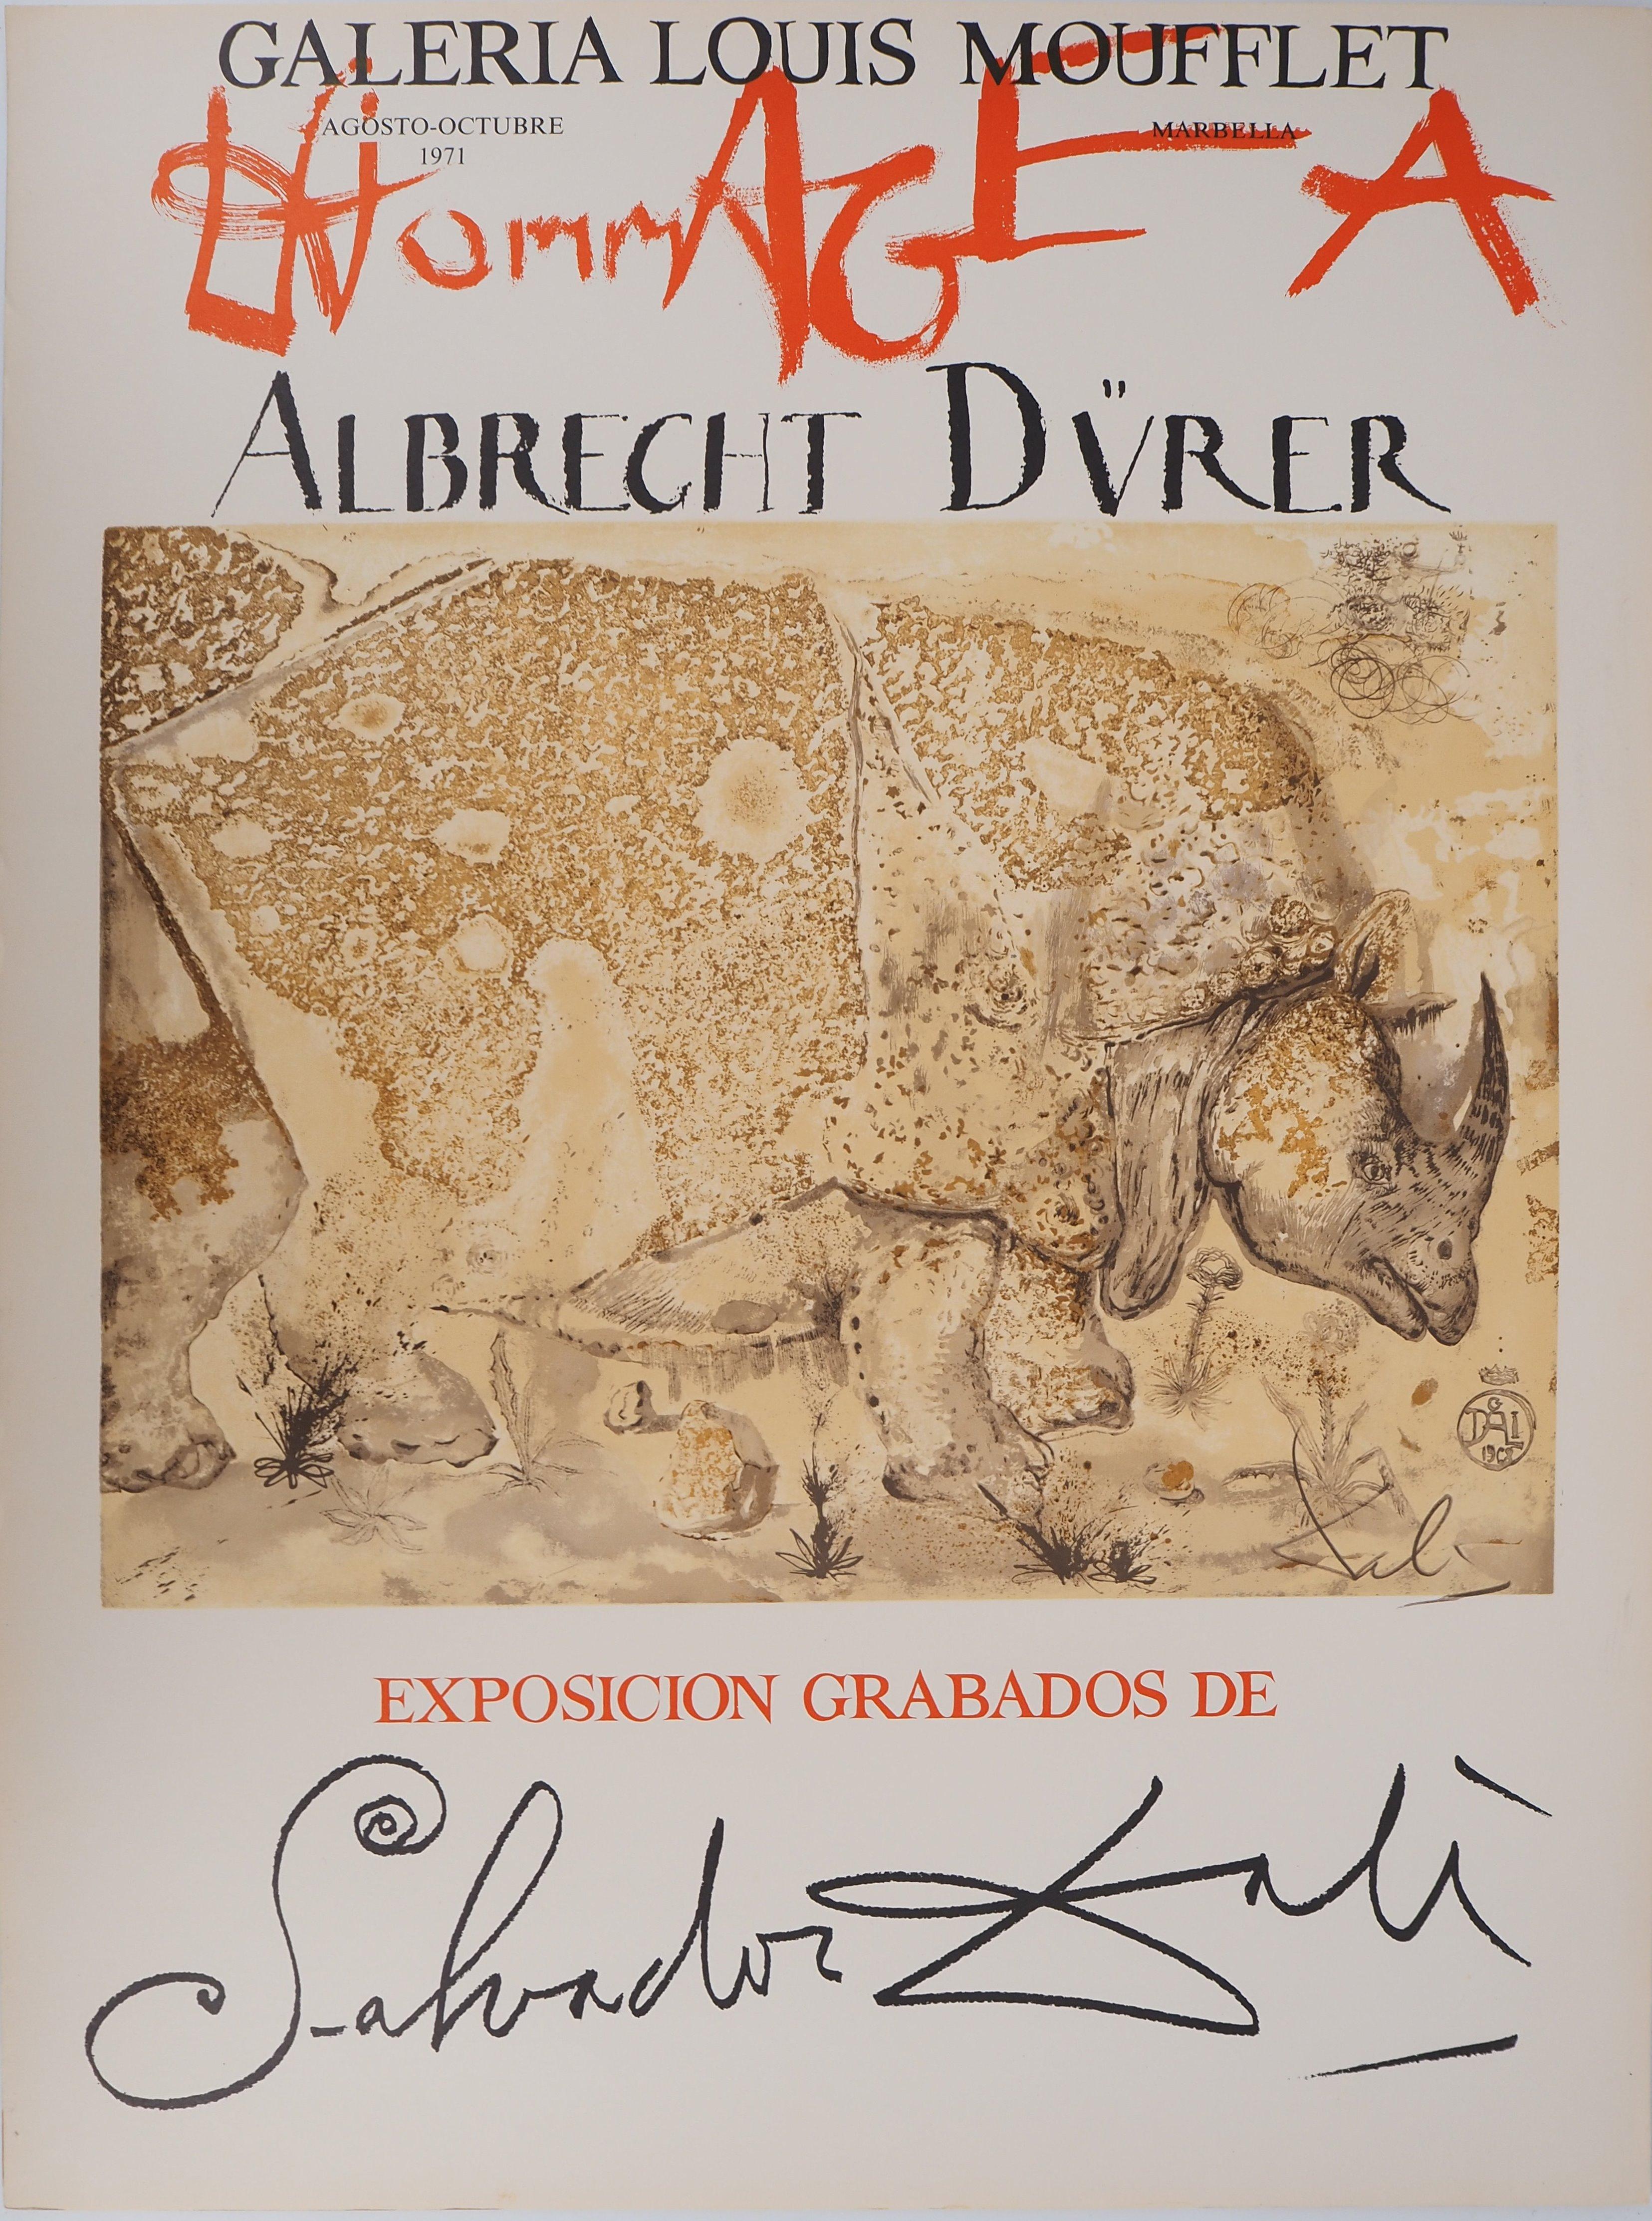 Rhinoceros, Tribute to Albrecht DURER - Original lithograph poster (Gaspar #1503